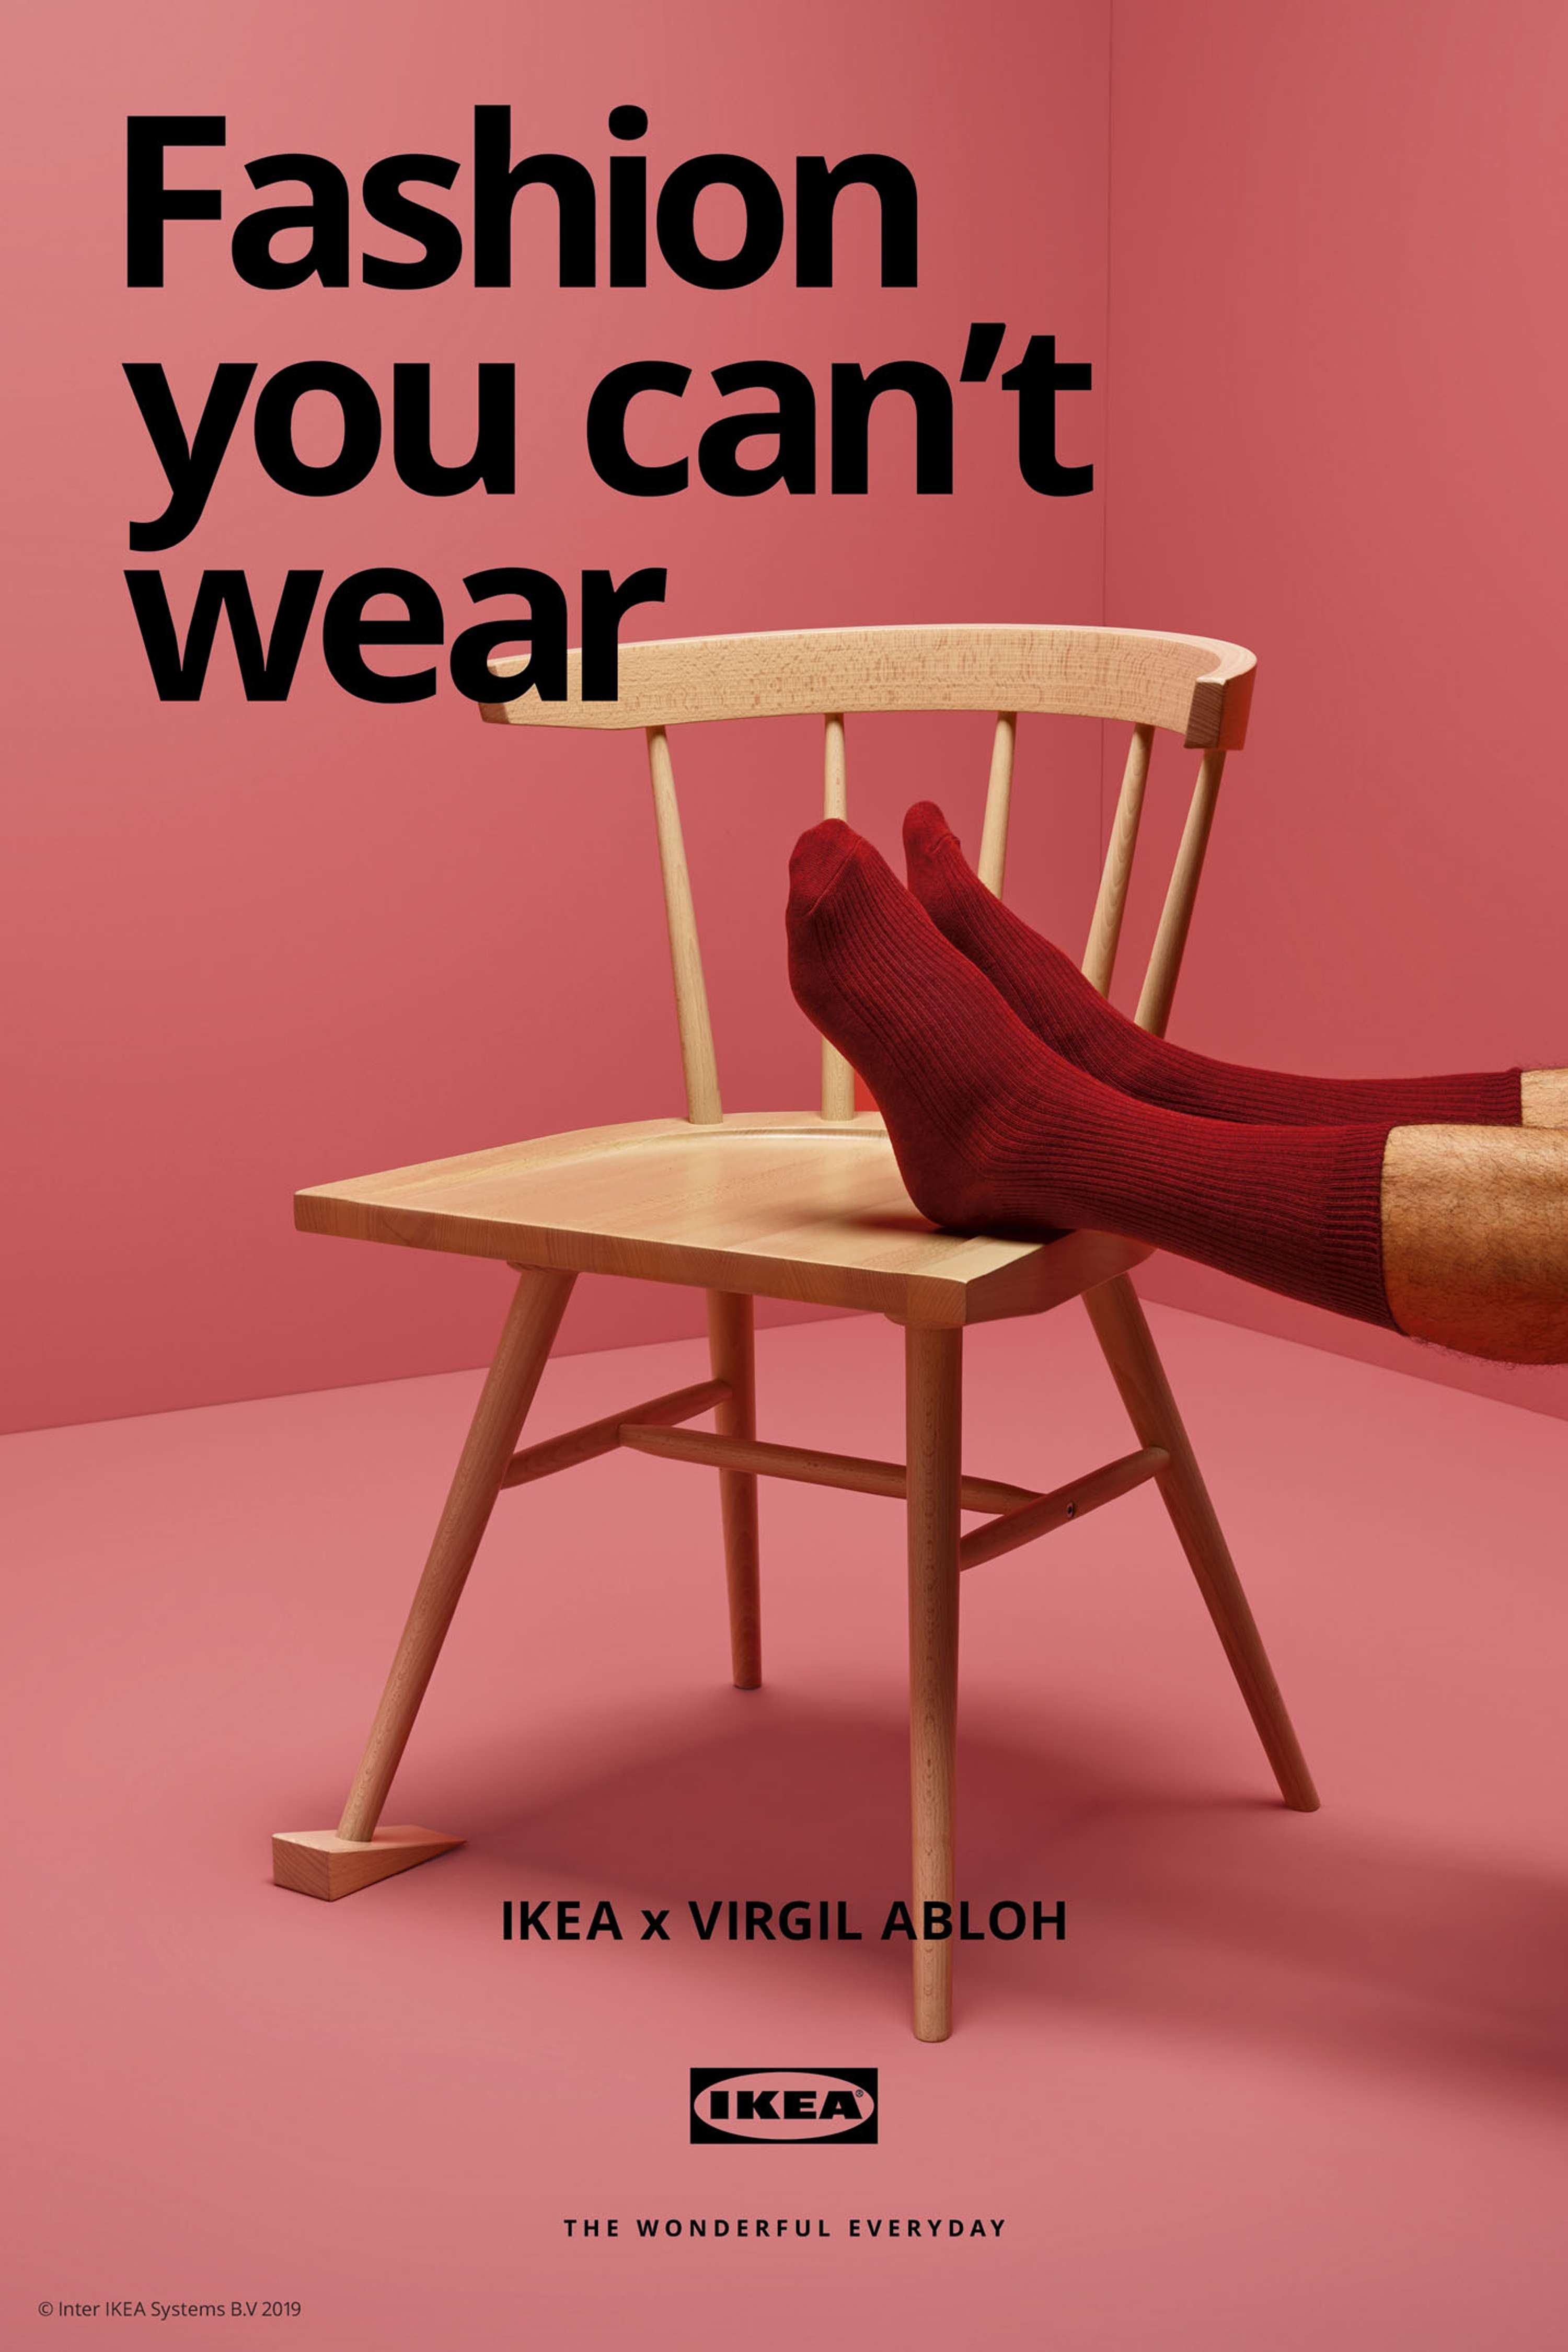 IKEA x Virgil Abloh - Mother - London